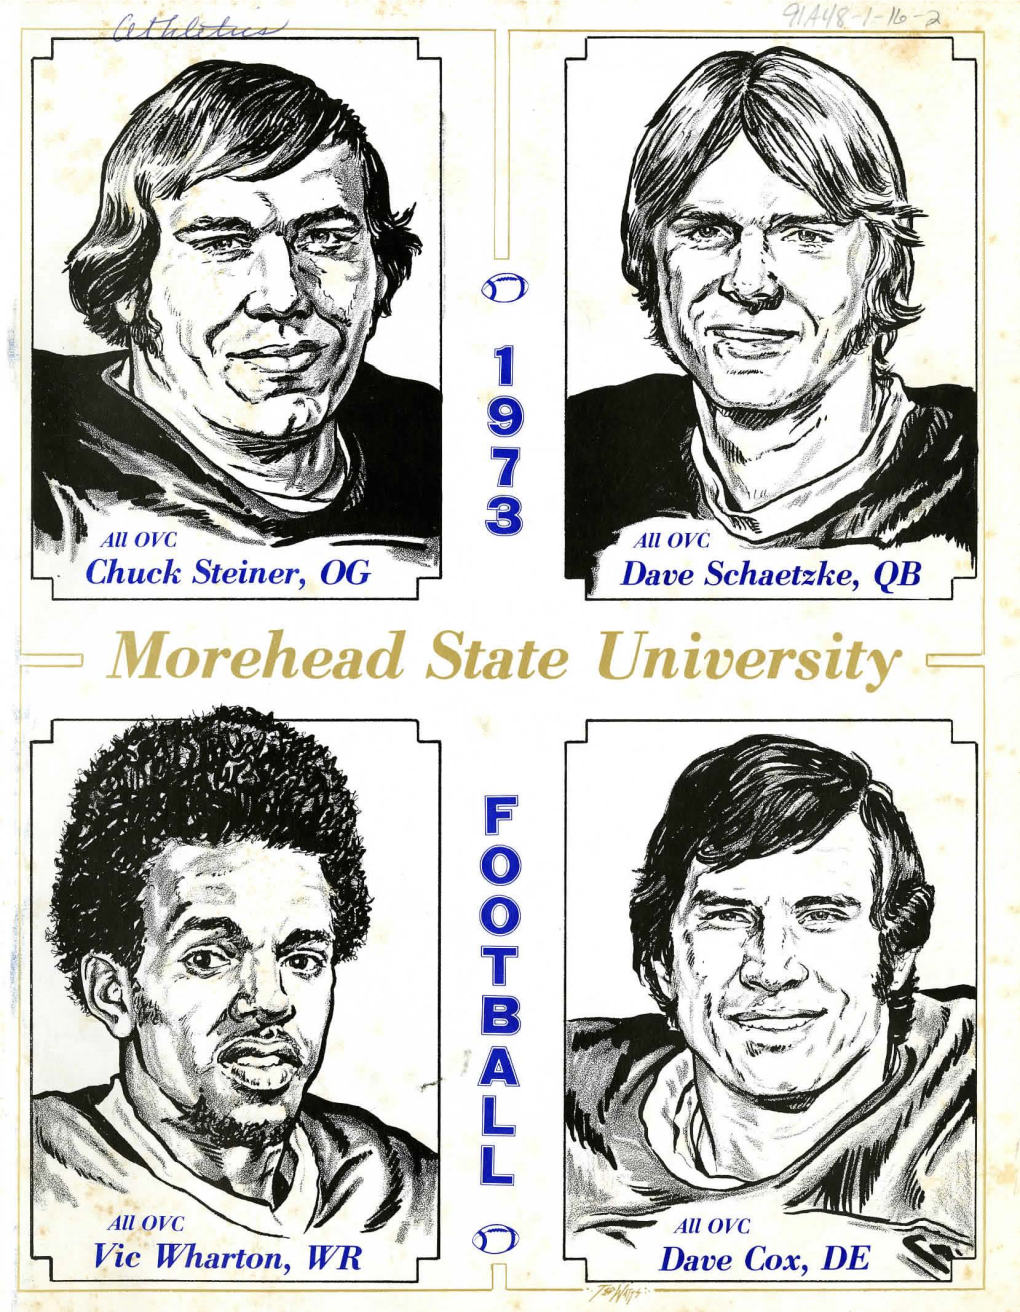 1973 Football Morehead State University